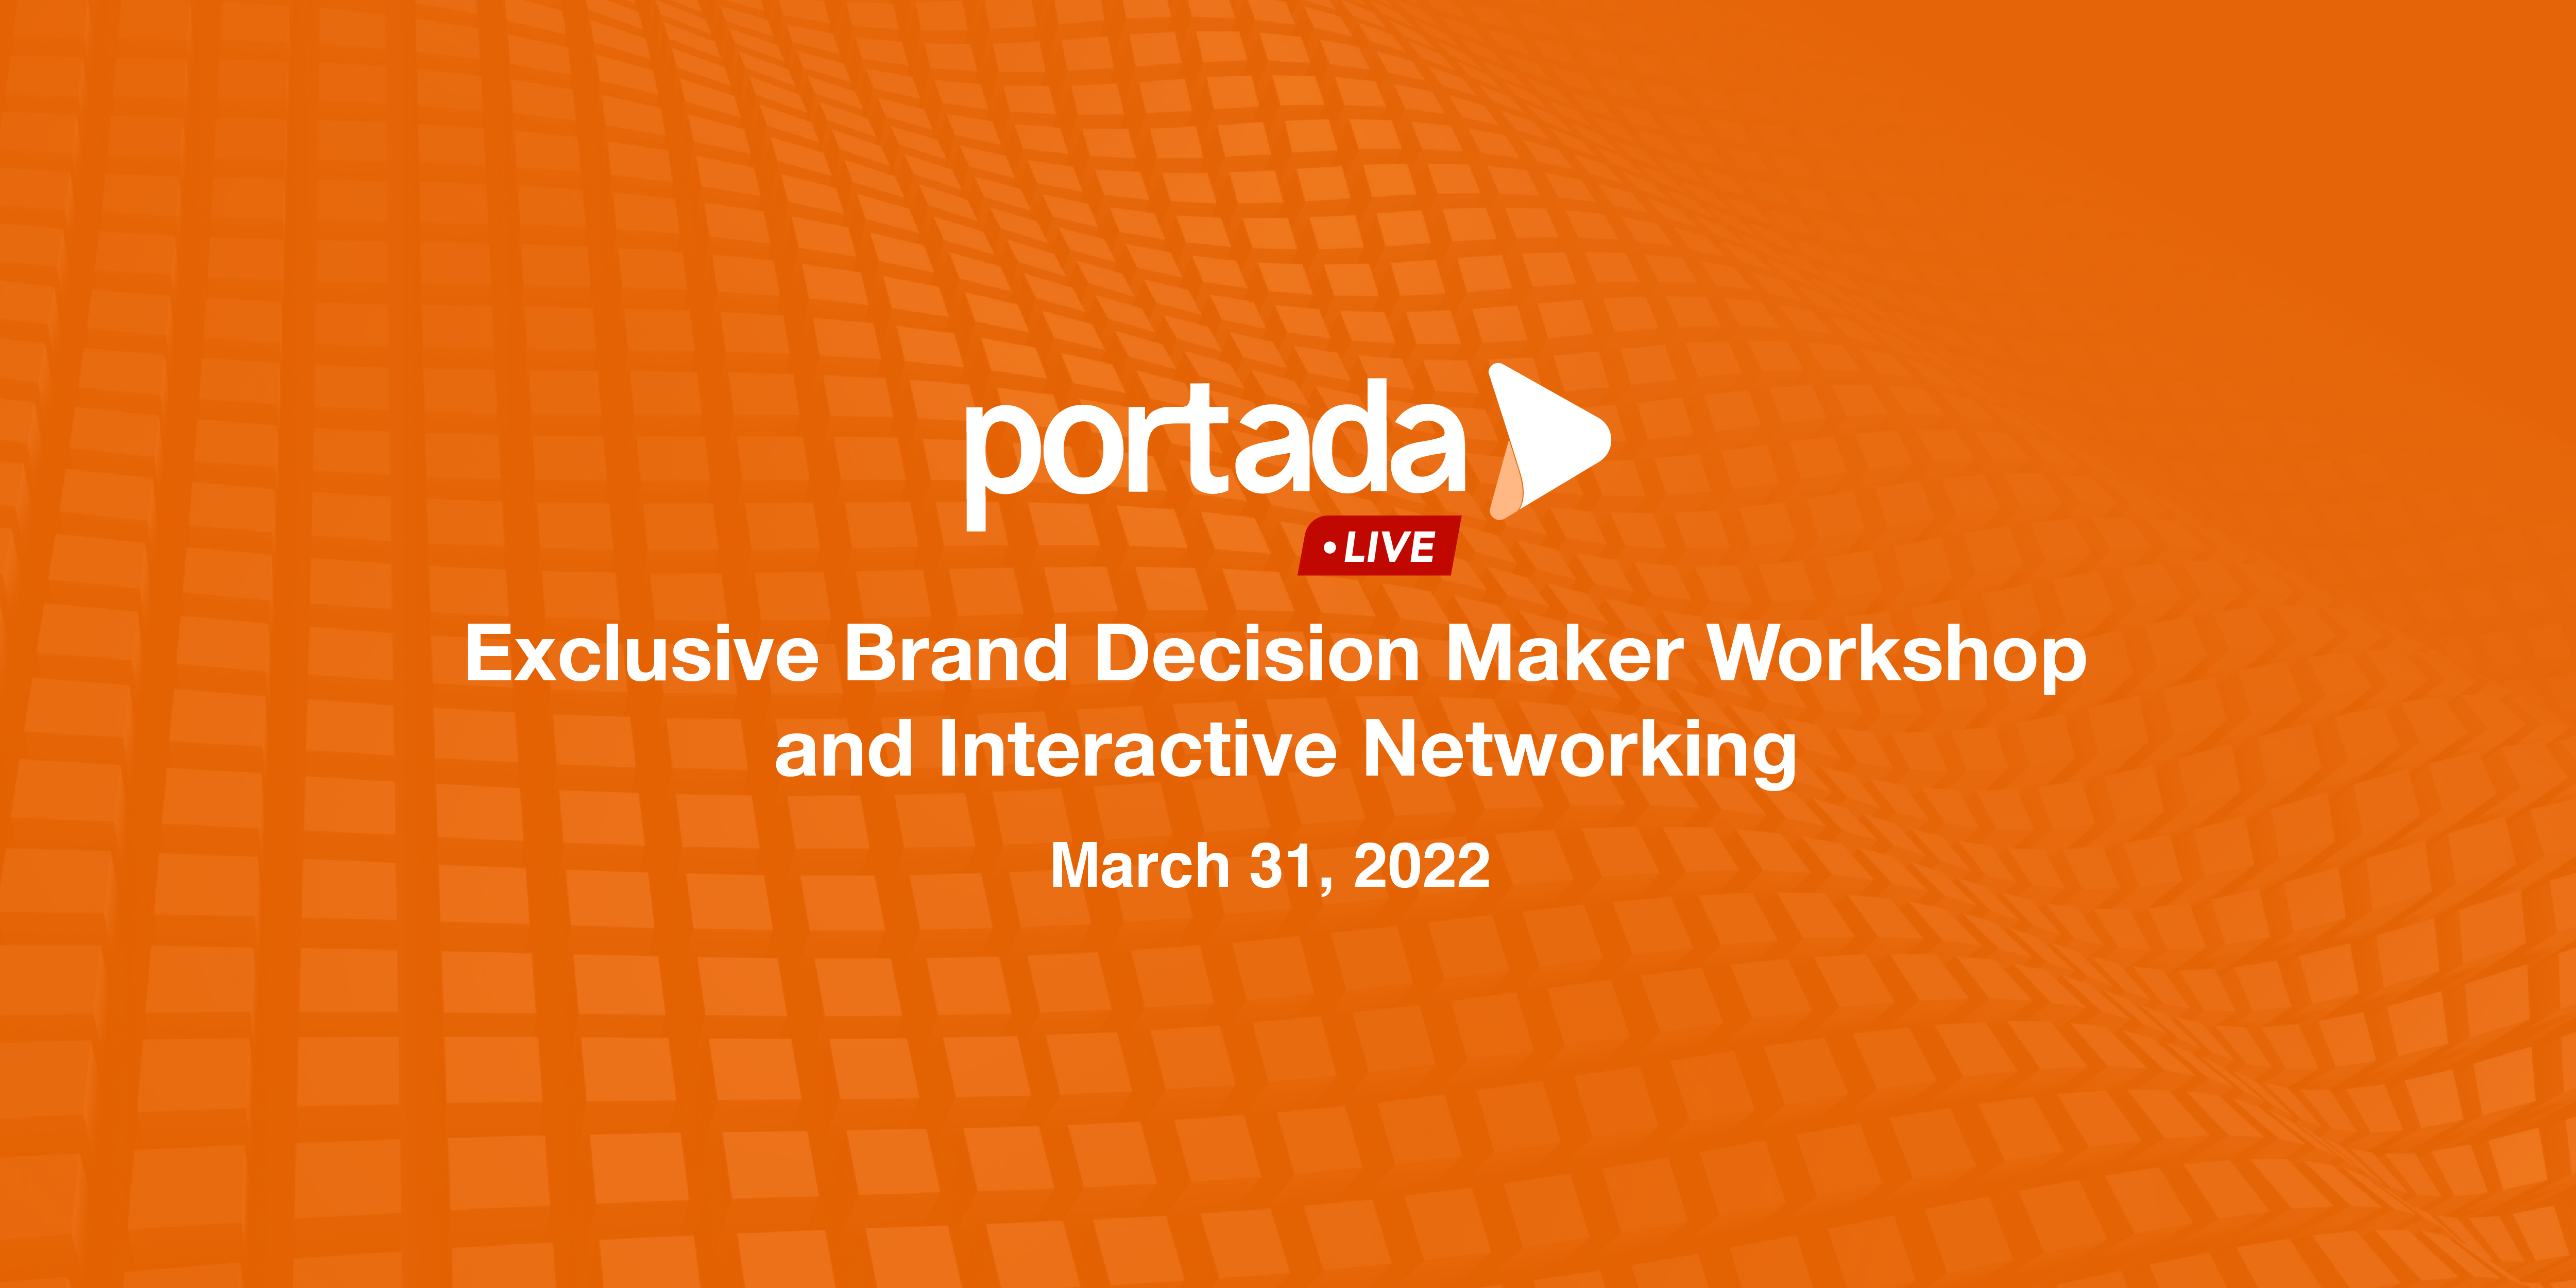  Portada Live, March 31, 2022 